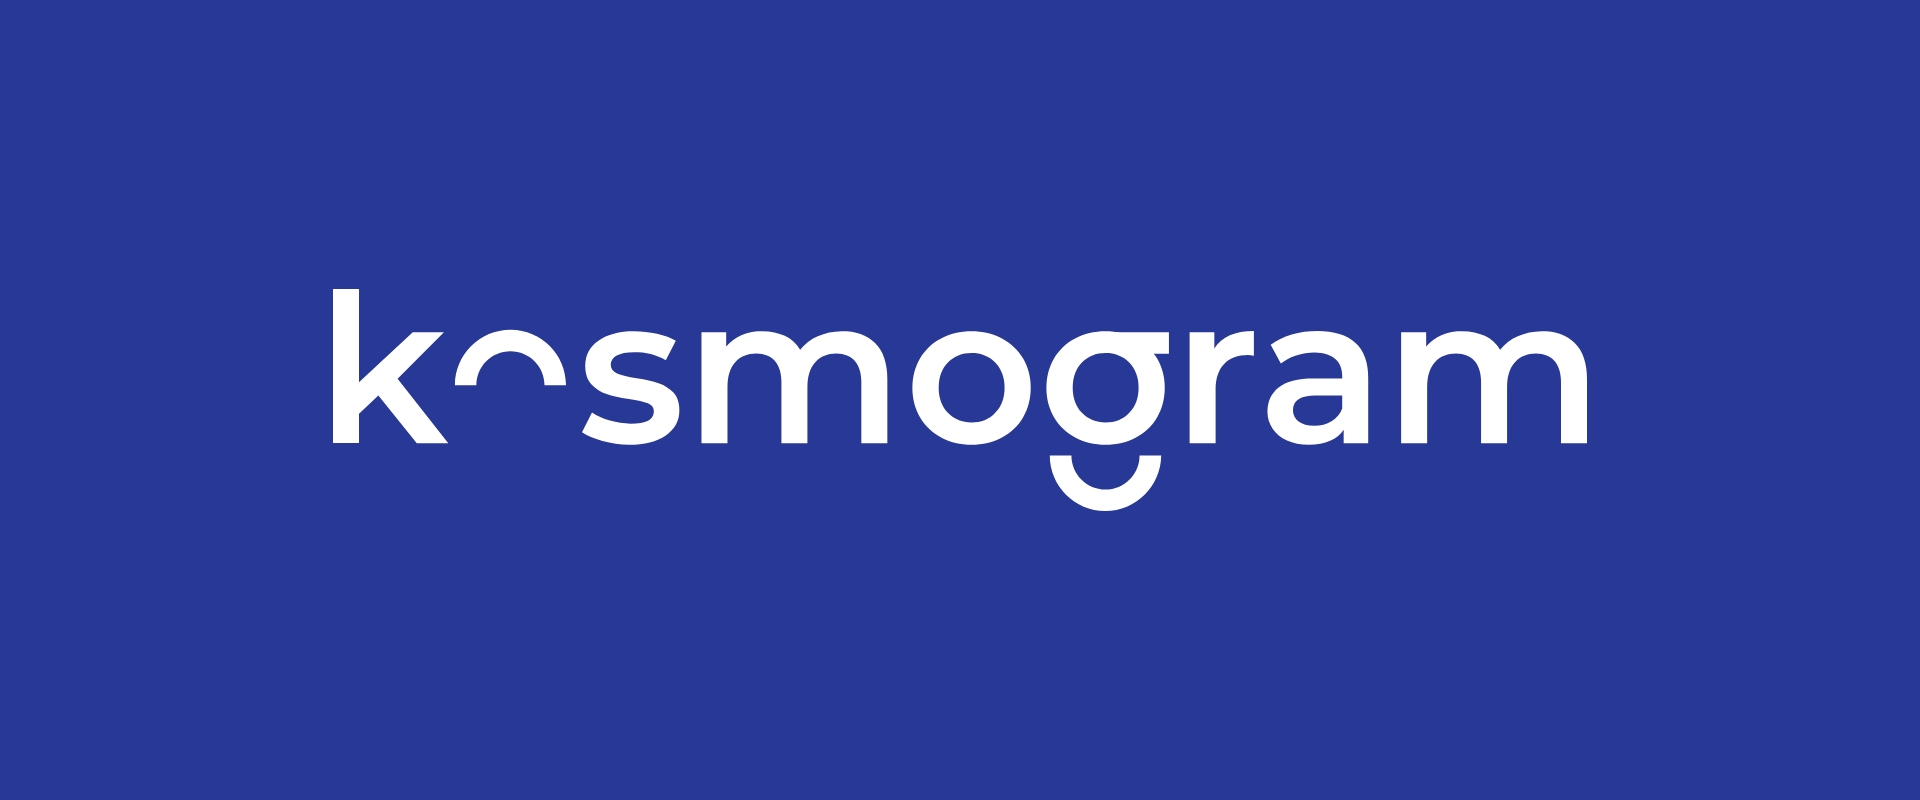 Kosmogram Logo